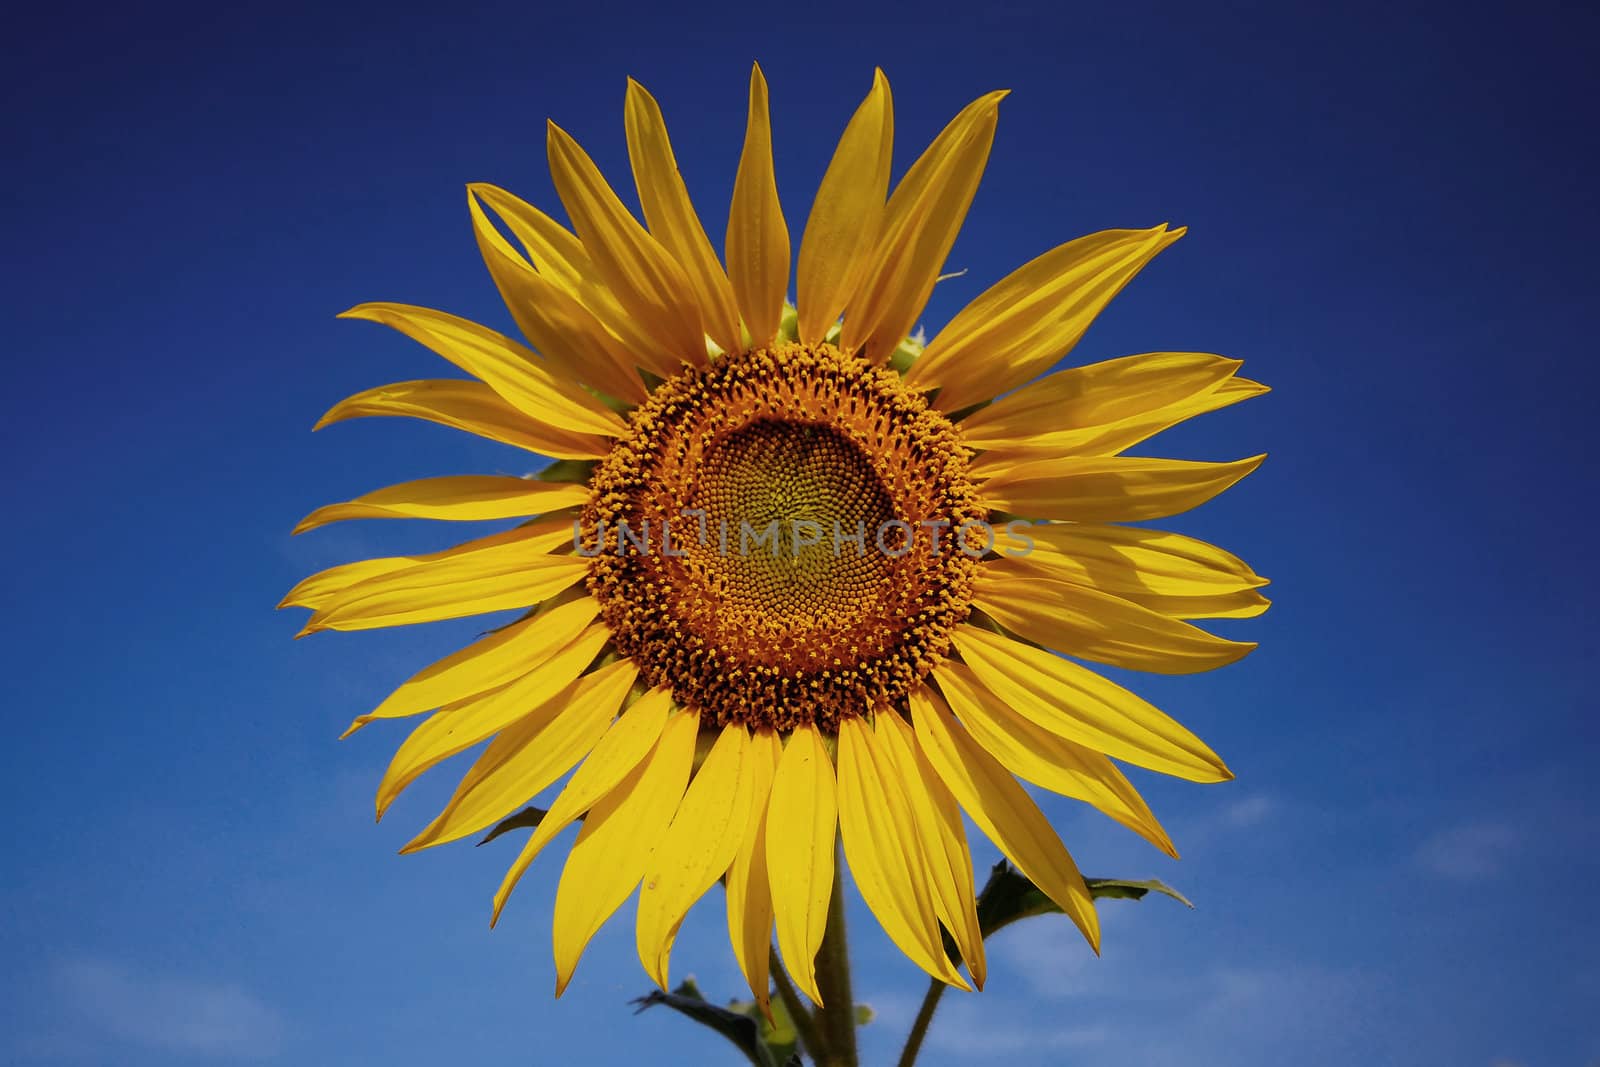 Sunflower and blue sky by porbital